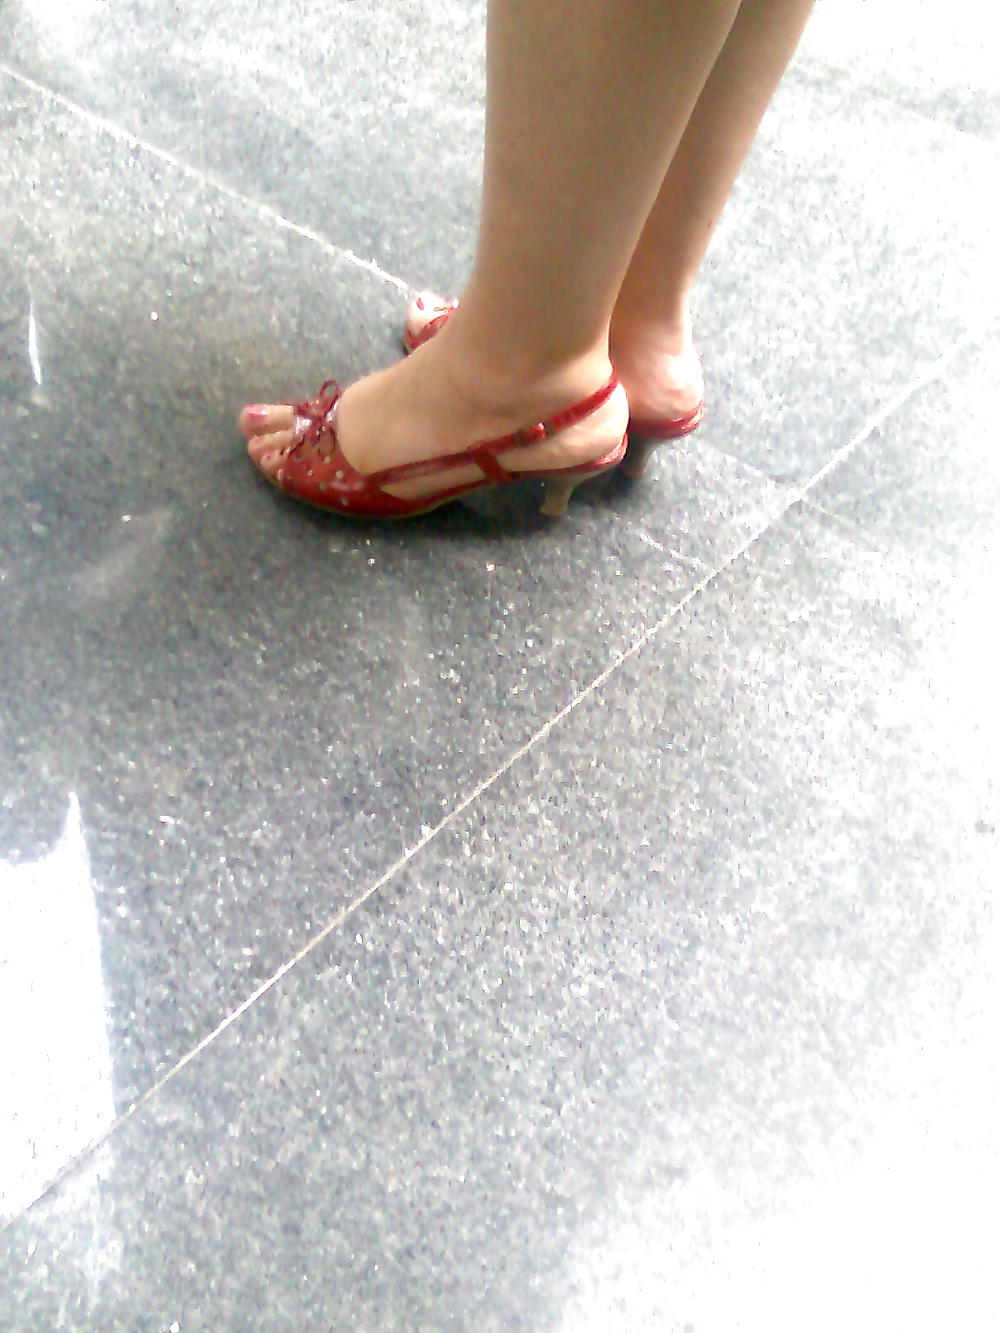 Candid feet red polished toenails #13979824